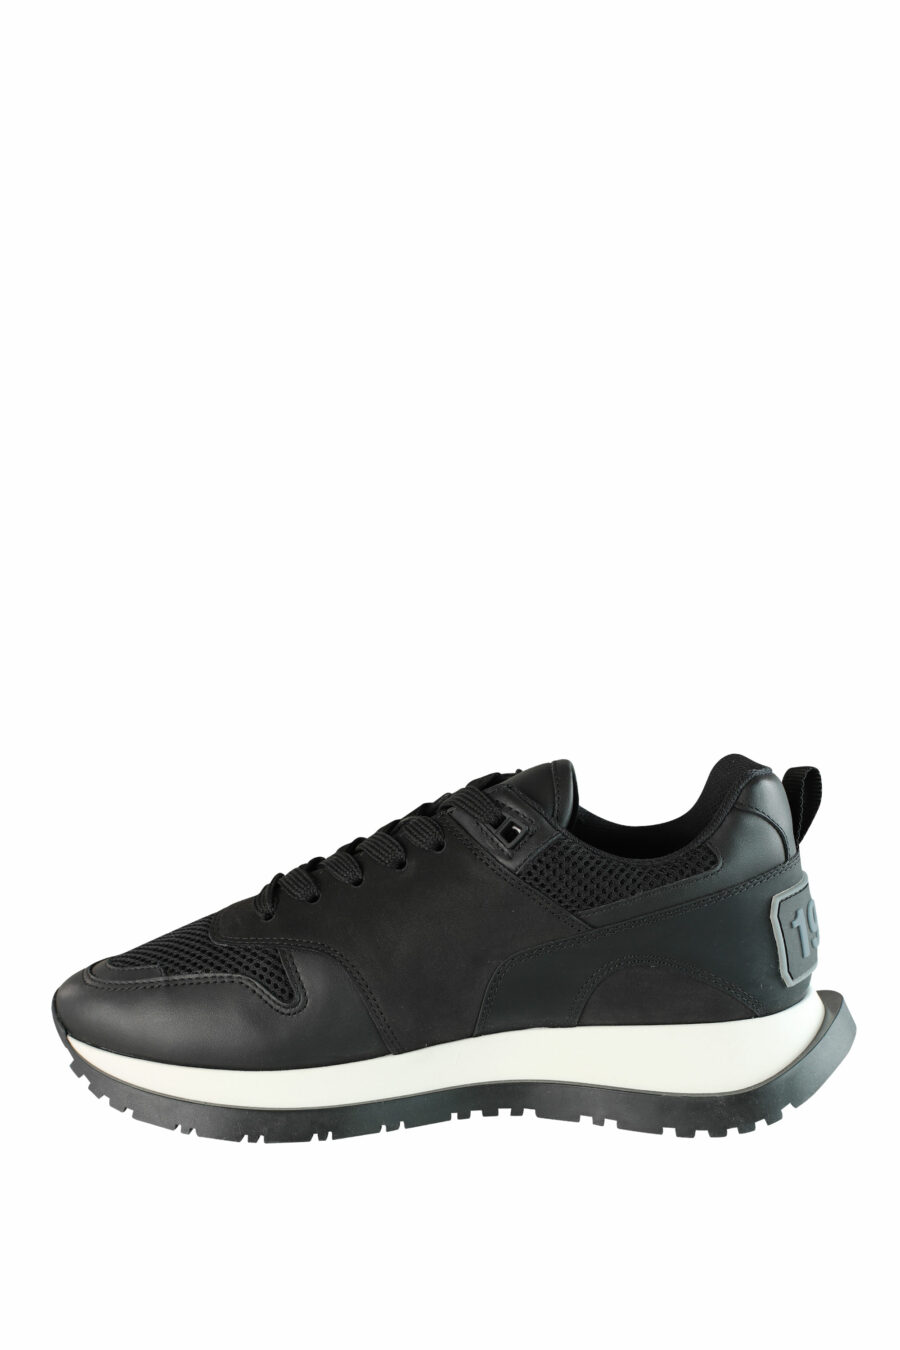 Zapatillas negras "running" con suela blanca con logo negro - IMG 1432